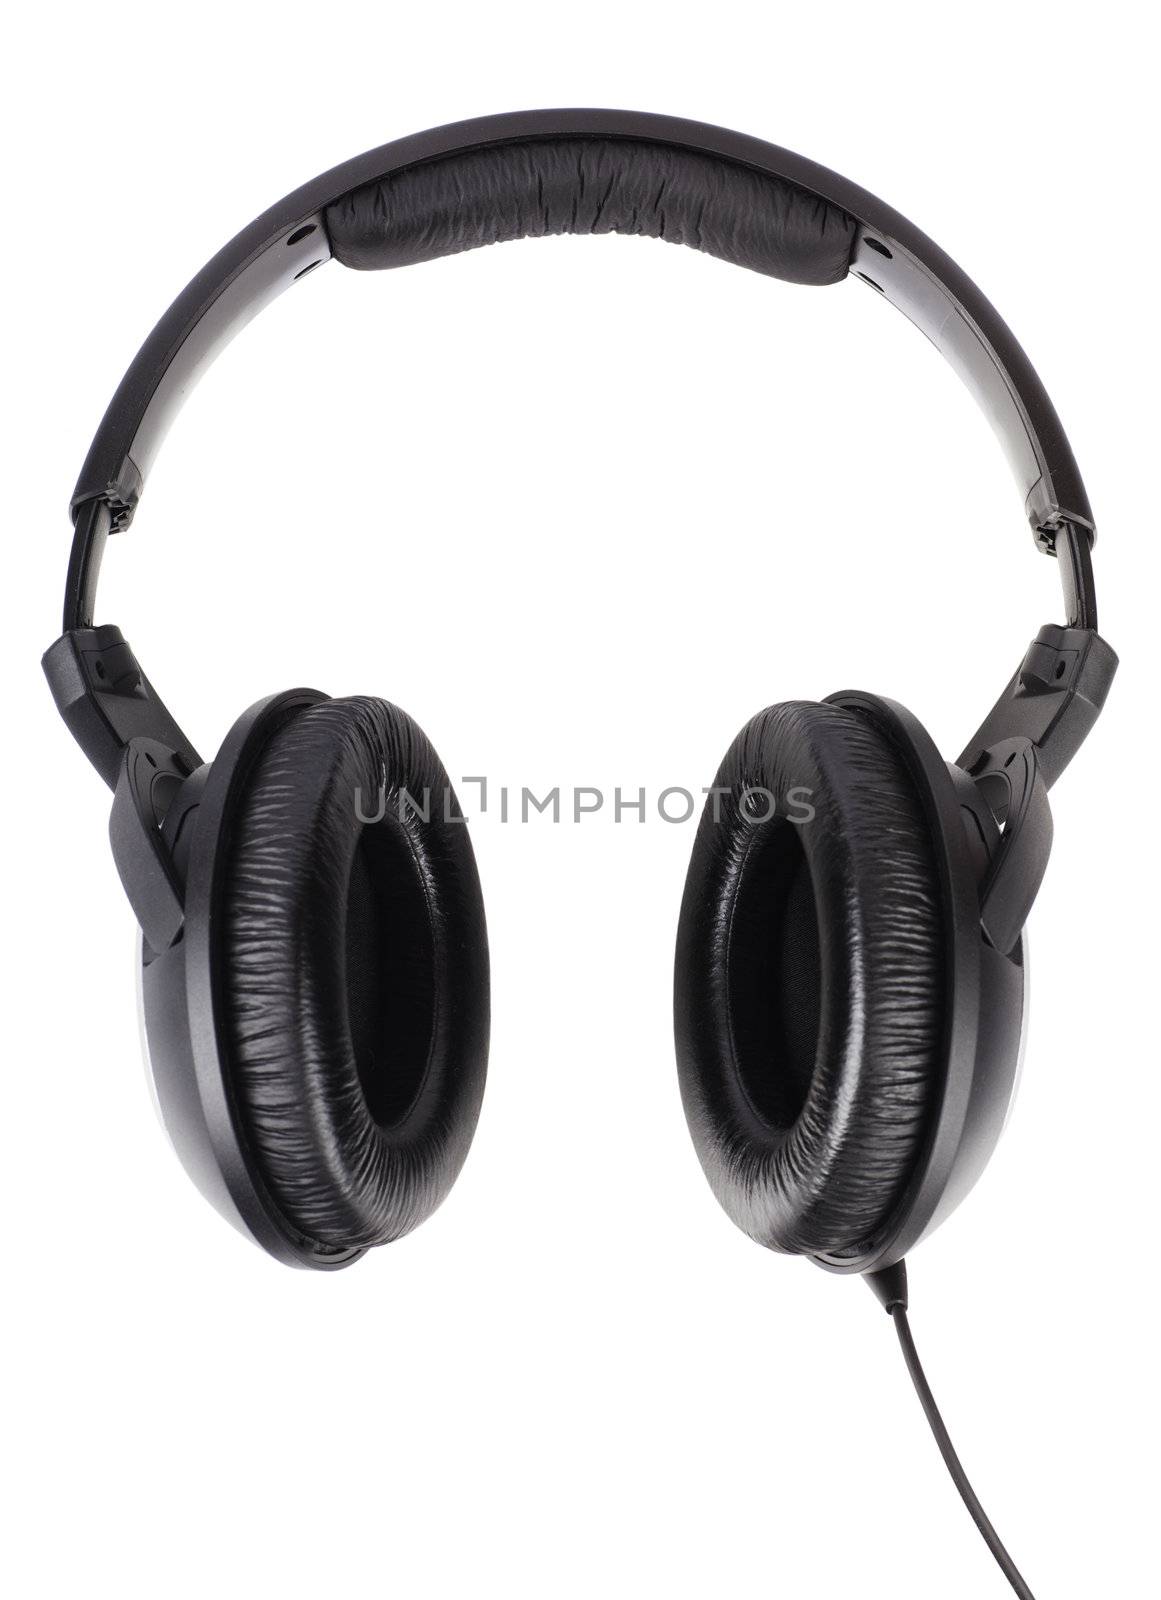 Headphones by AGorohov